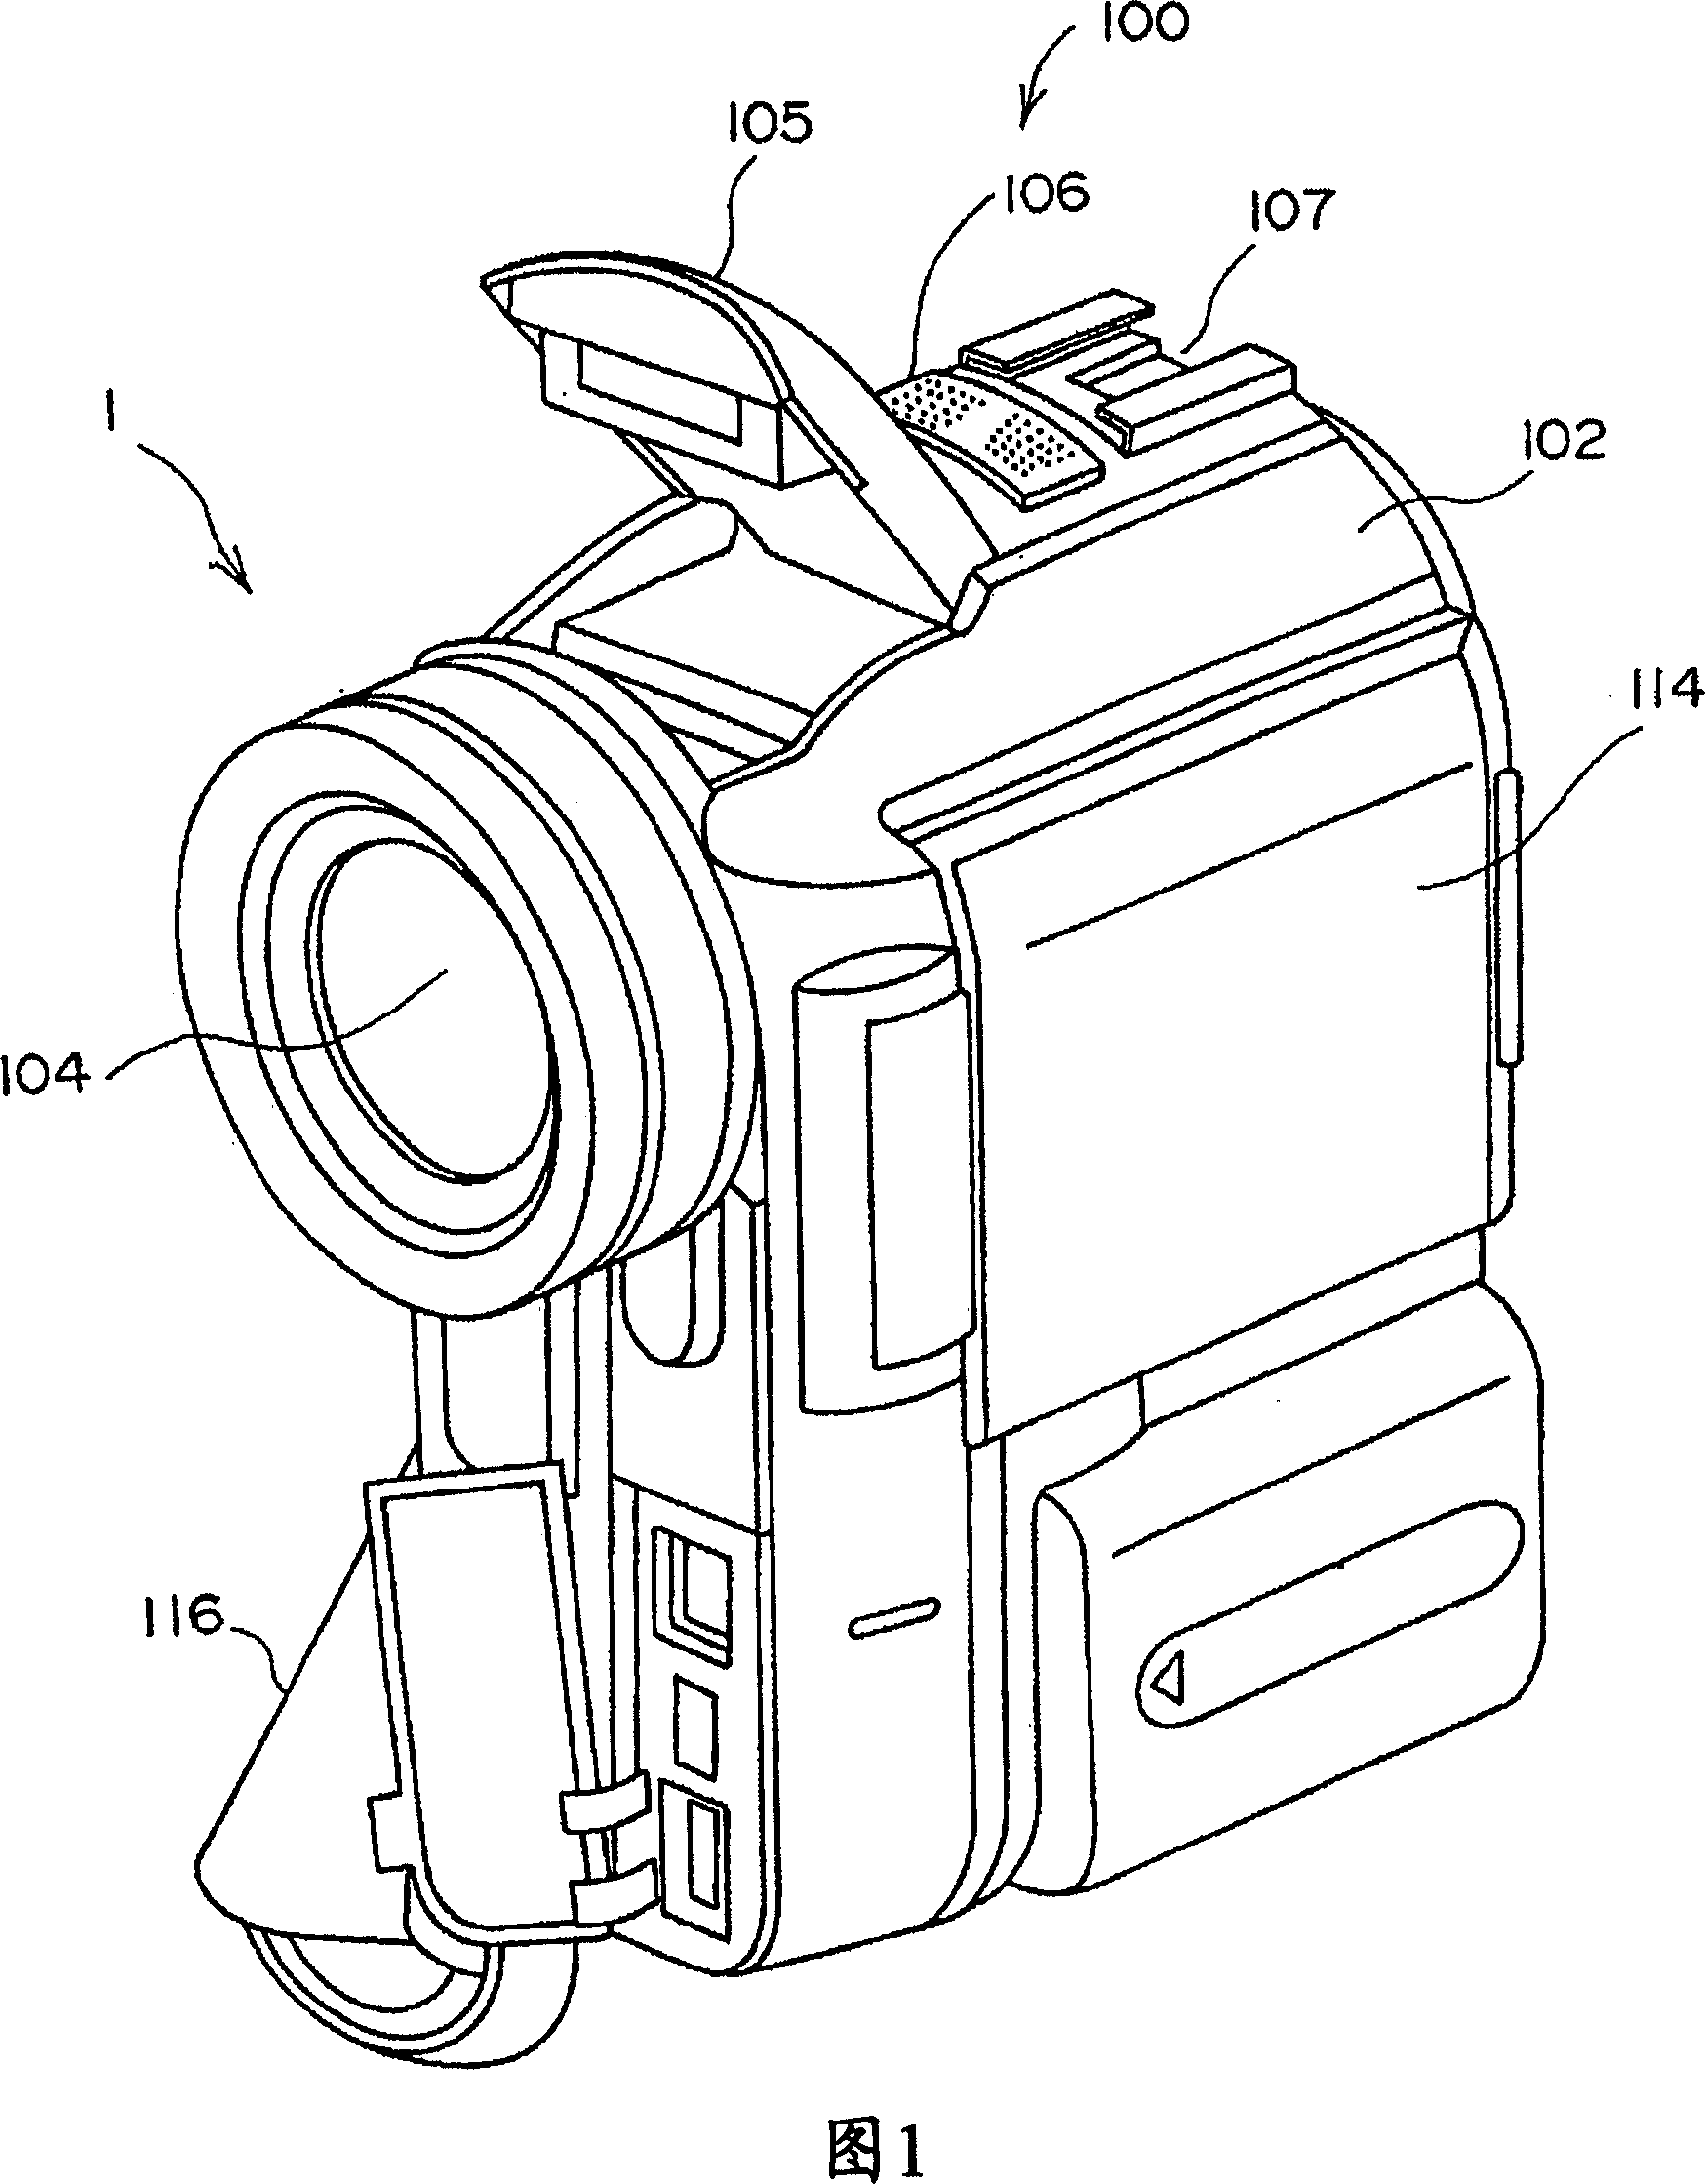 Lens barrel and image capturing apparatus